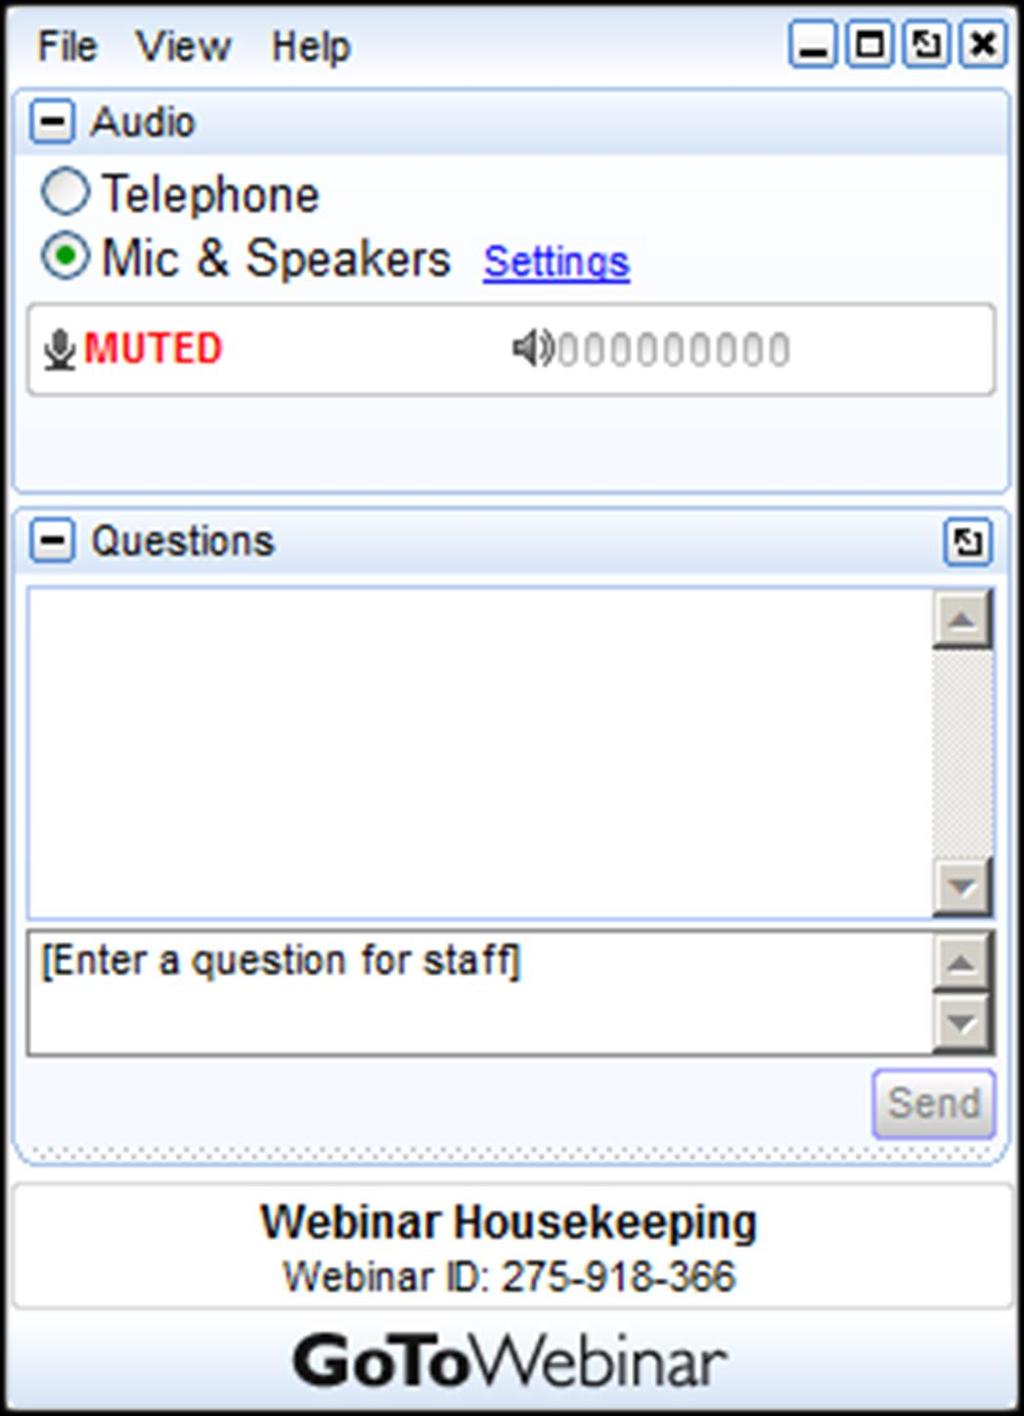 audio: Choose Mic & Speakers to use VoIP Choose Telephone